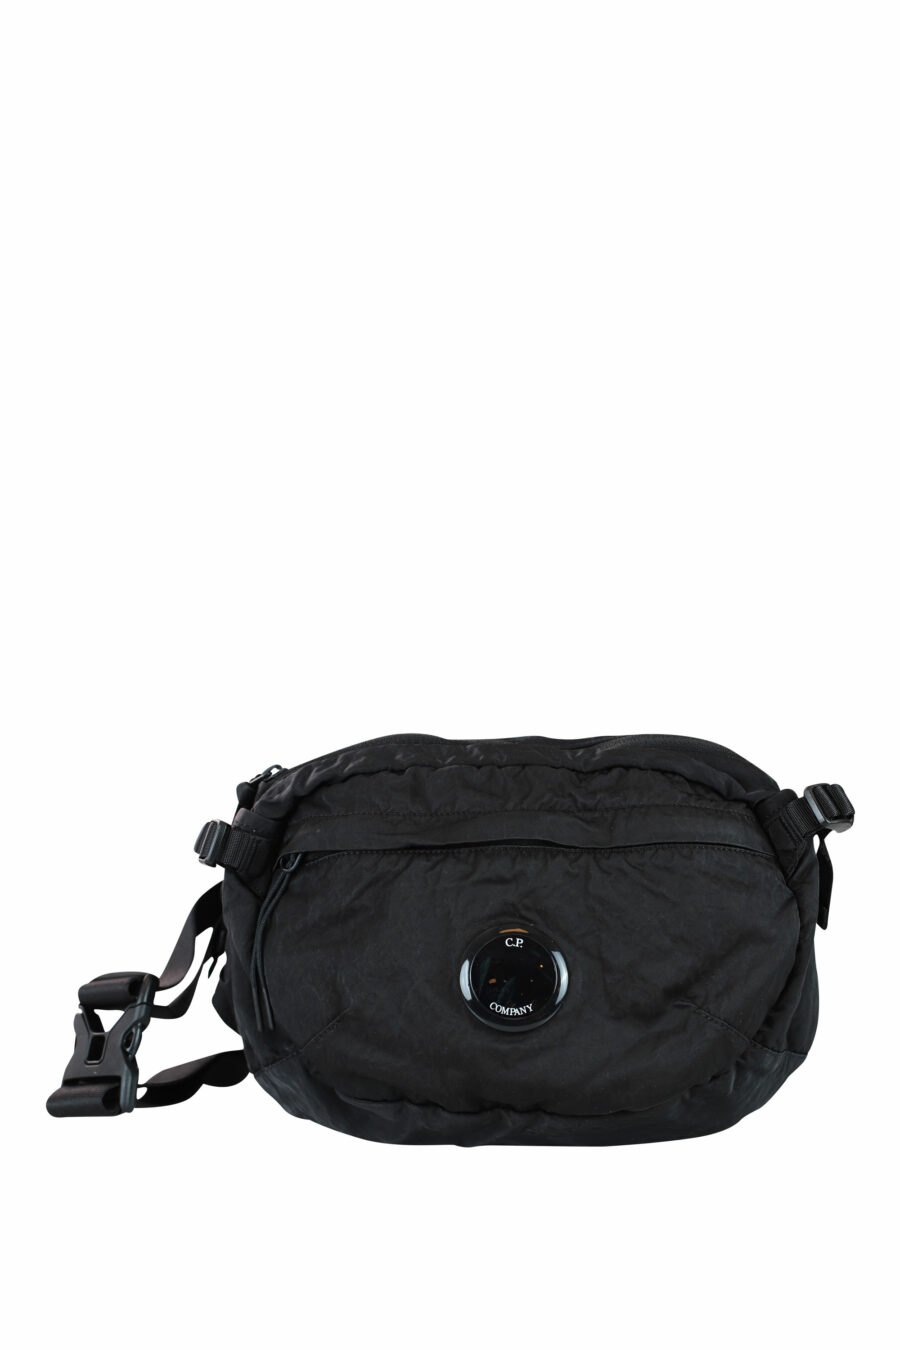 Bum bag black with circular mini-logo - IMG 0062